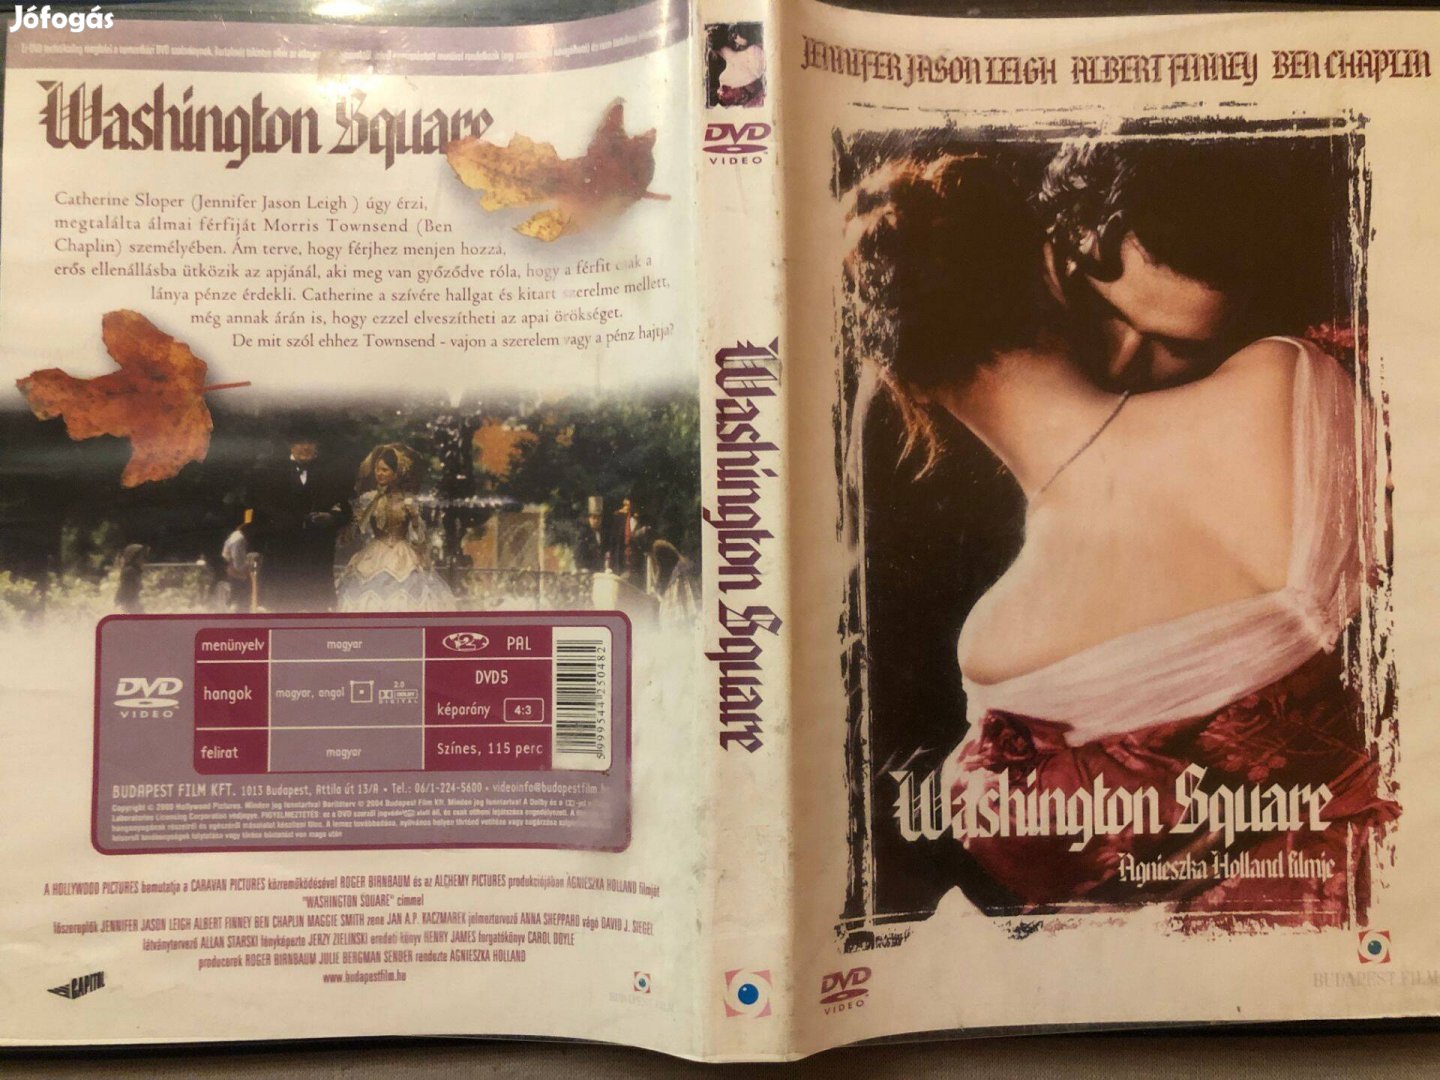 Washington Square DVD (karcmentes, ritkaság, Jennifer Jason Leigh)